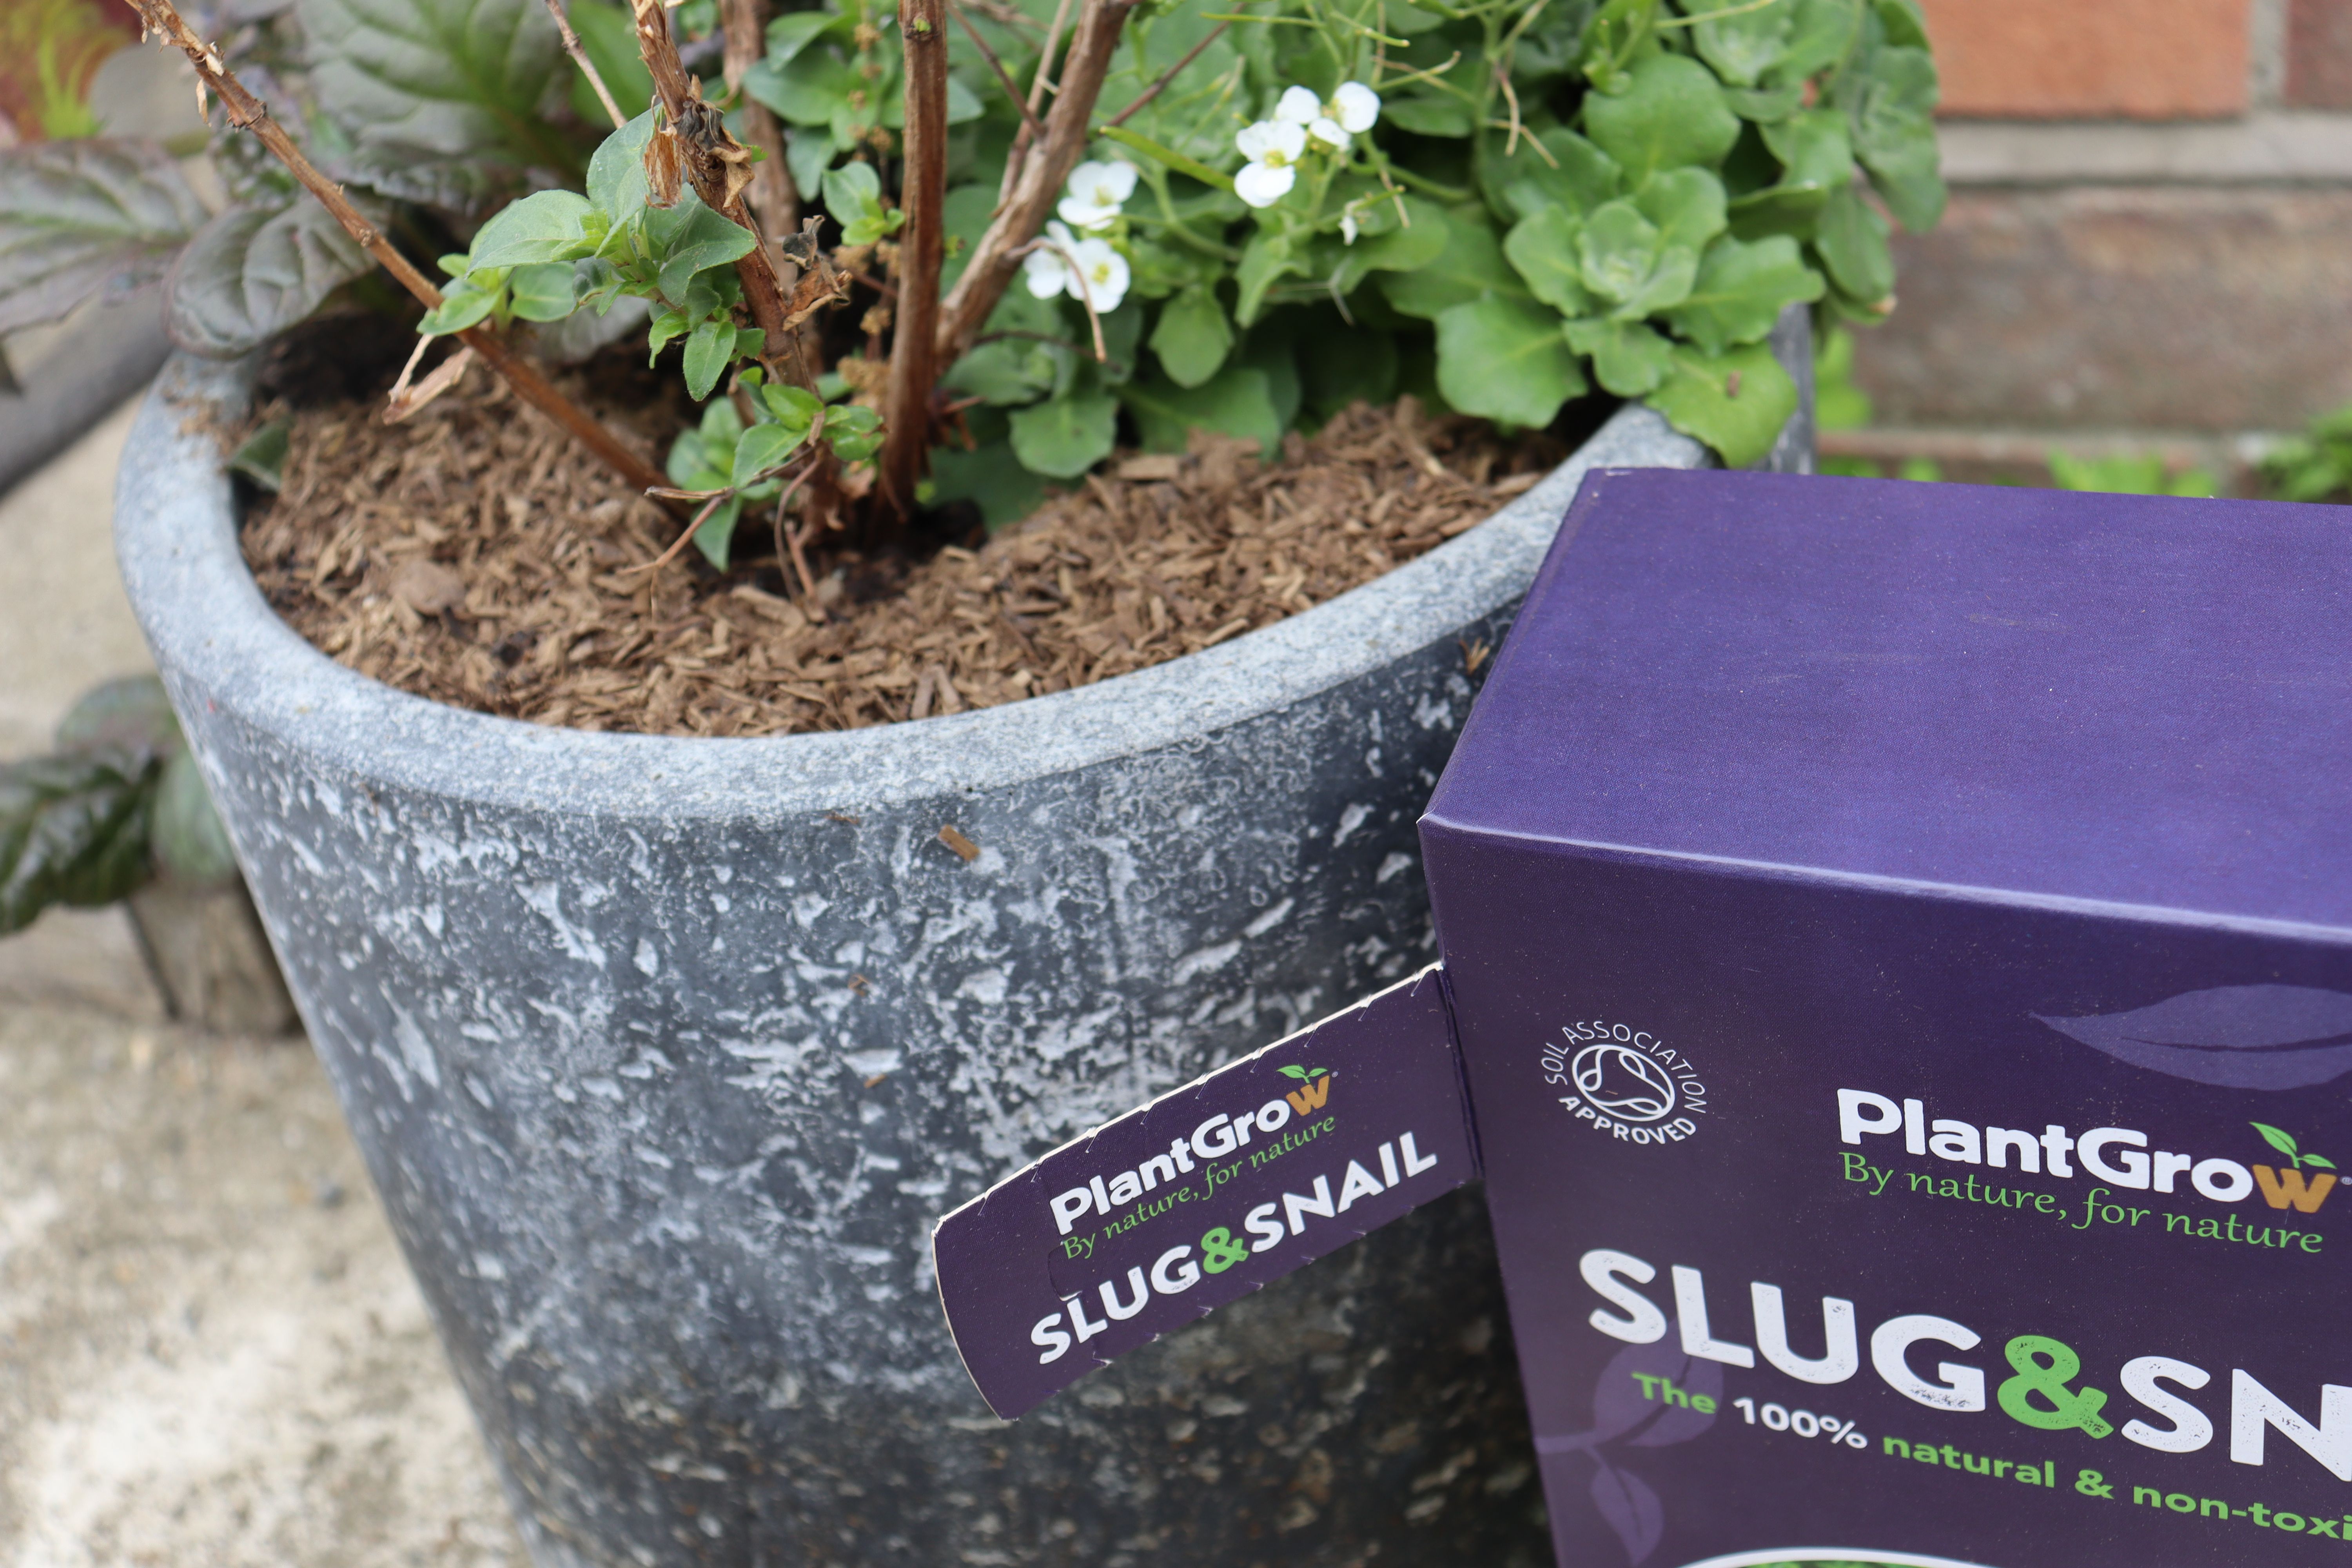 PlantGrow Slug & Snail Barrier